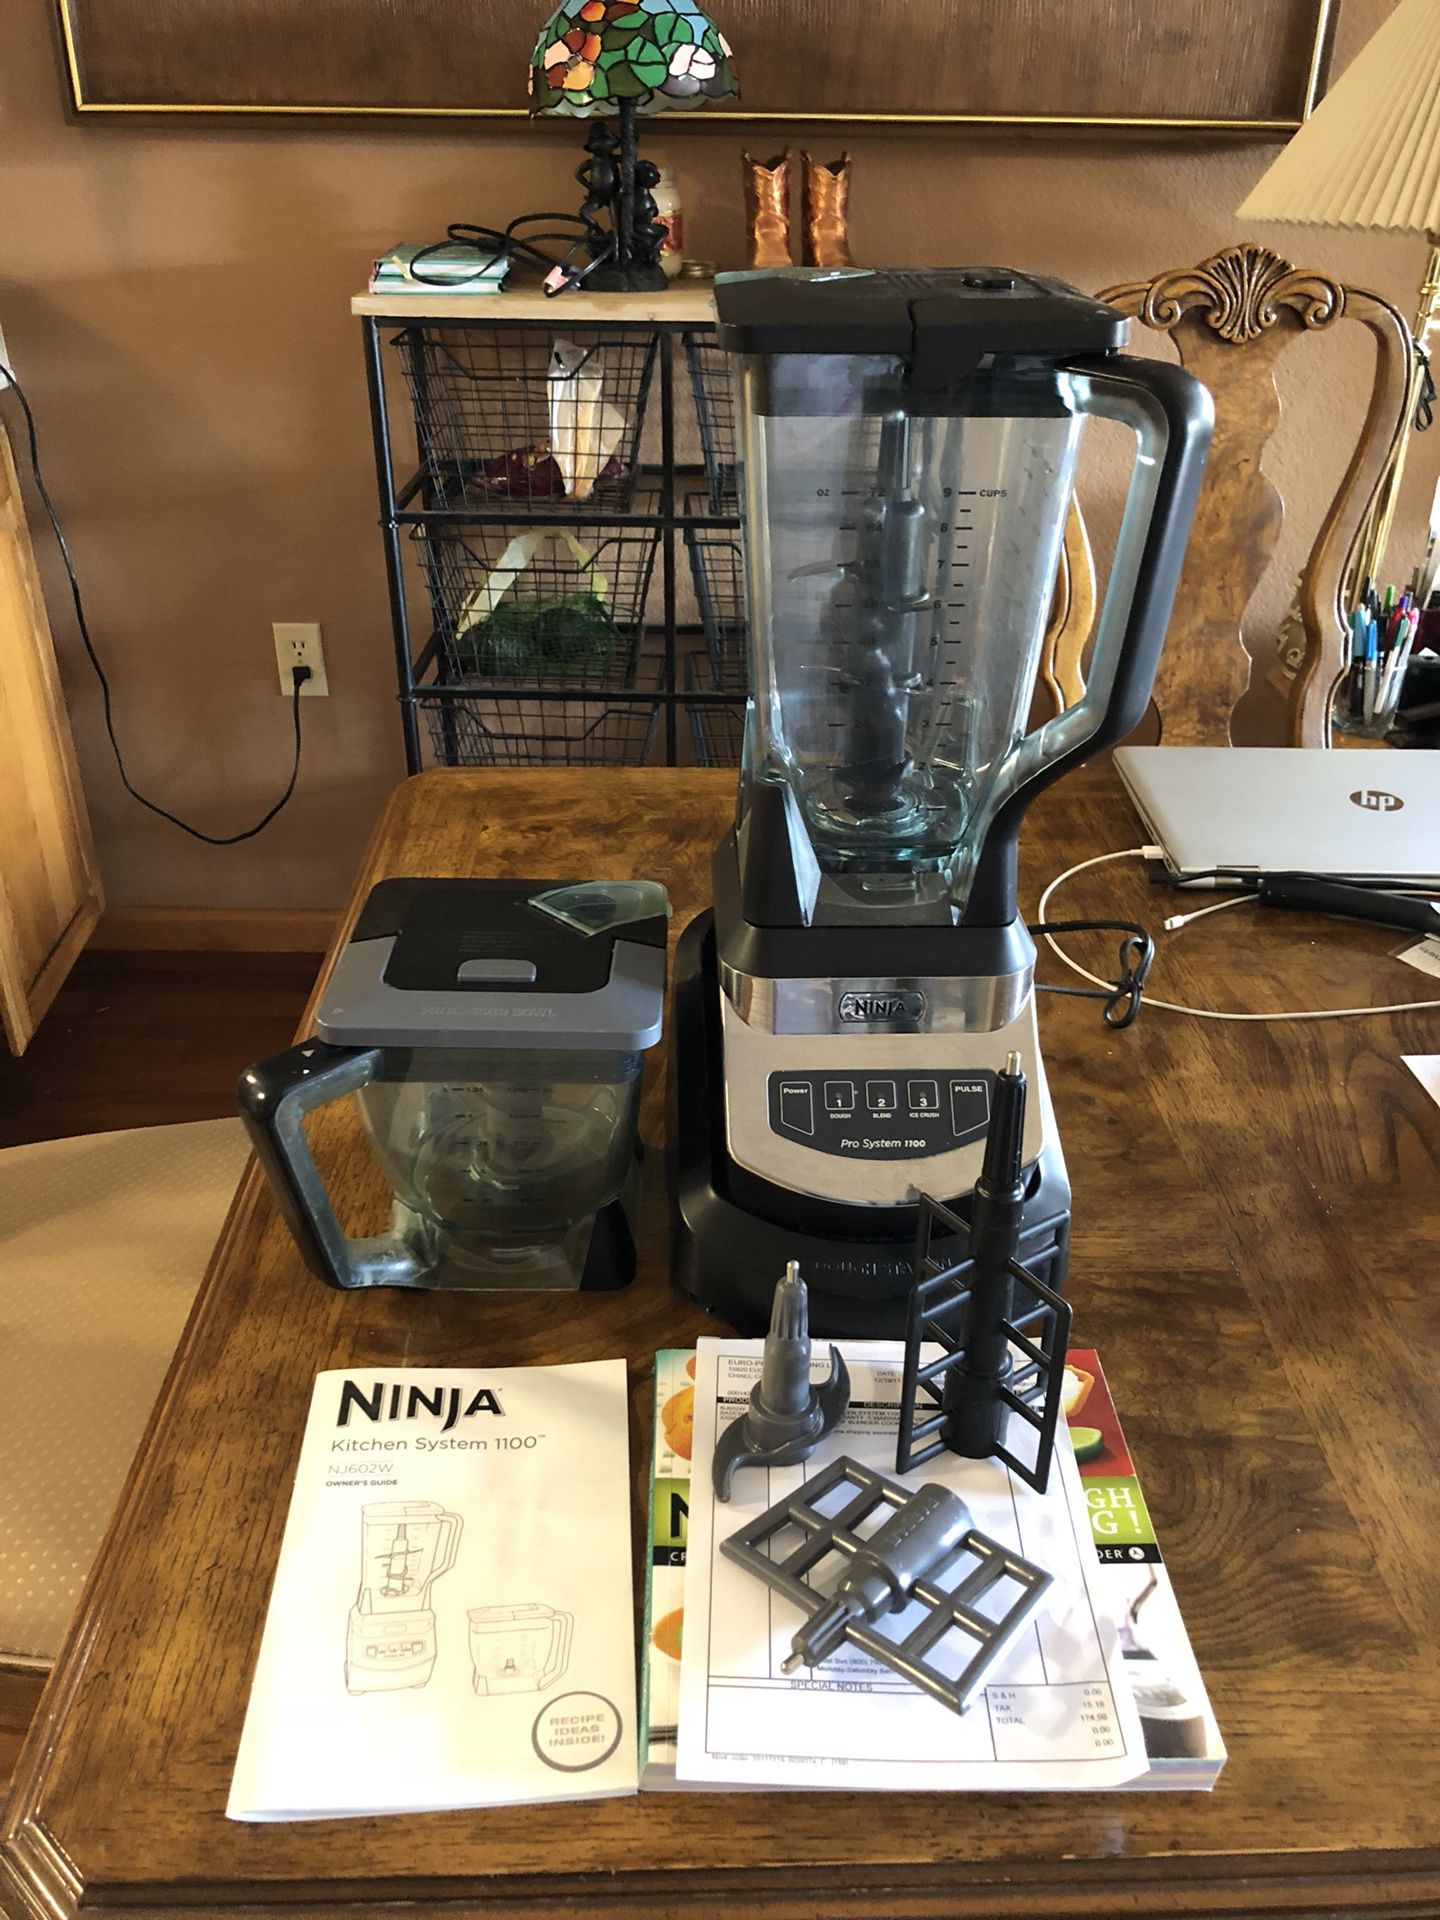 Ninja Pro System 1100 Blender Model NJ602W Food Processor Kitchen